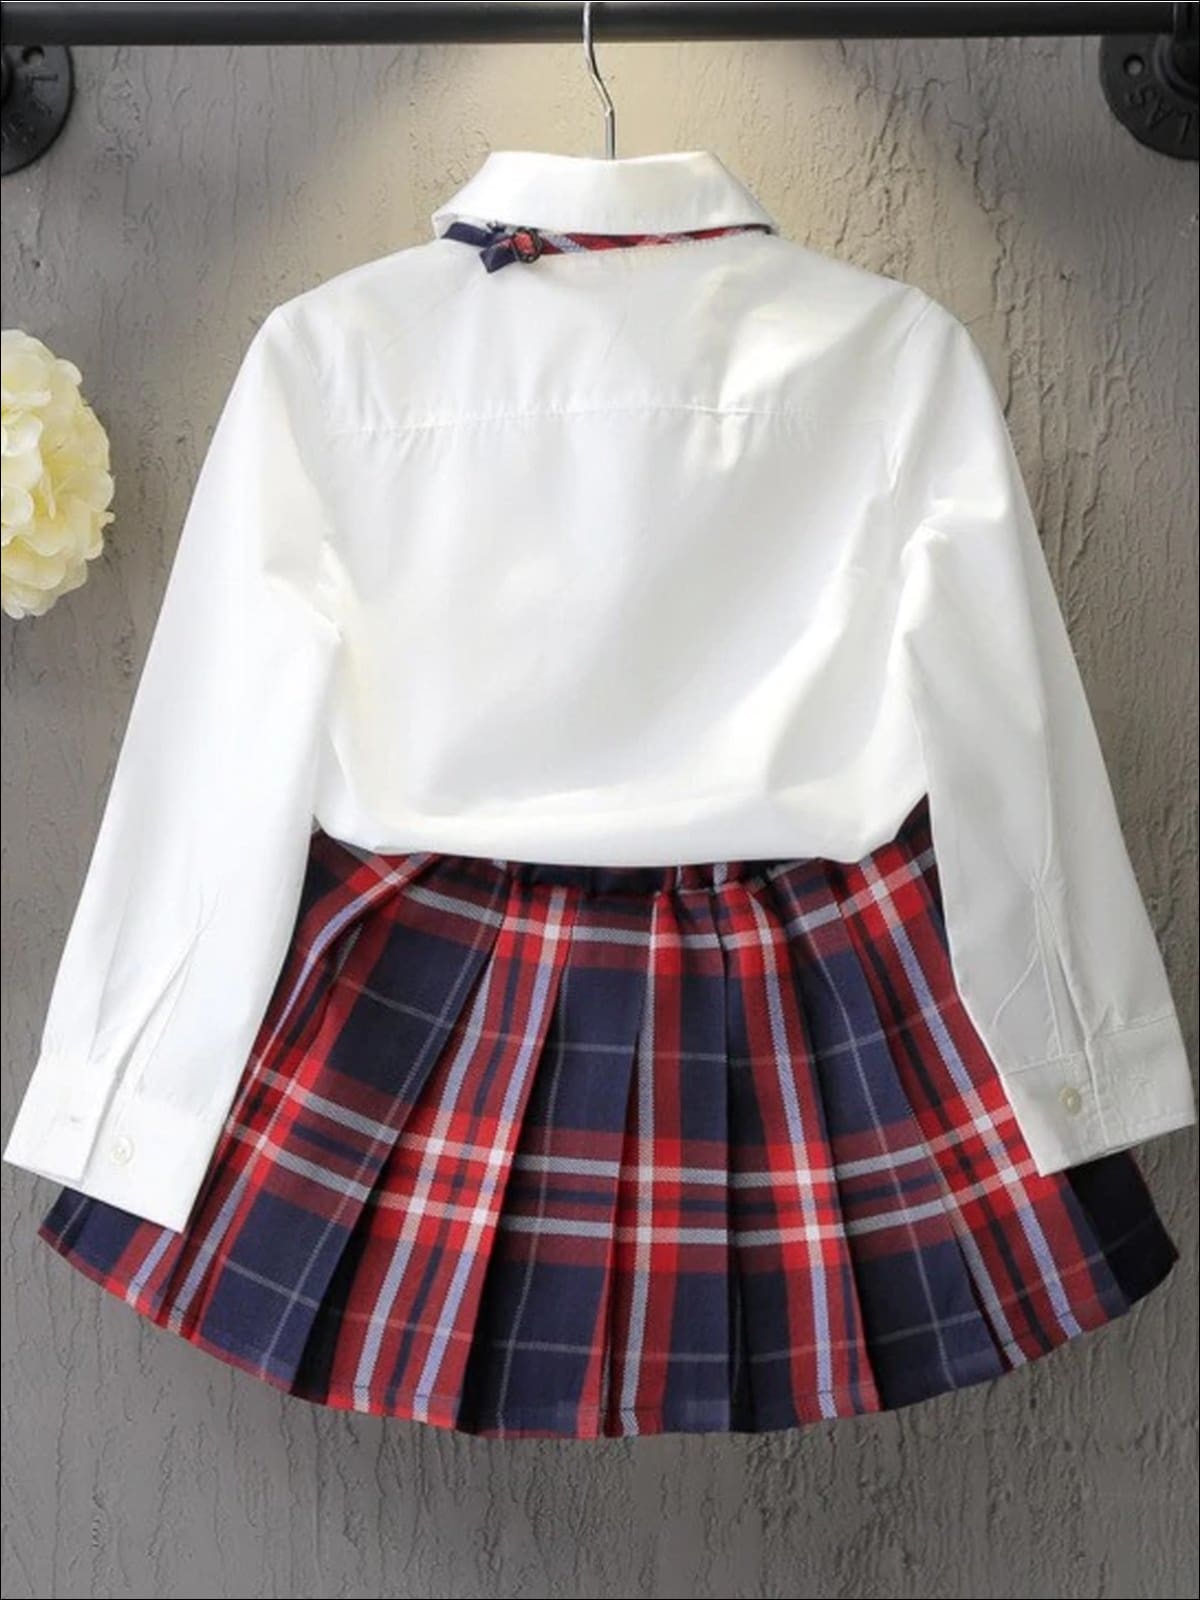 Preppy Chic Outfit | Blouse, Tie, & Plaid Skirt Set | Mia Belle Girls